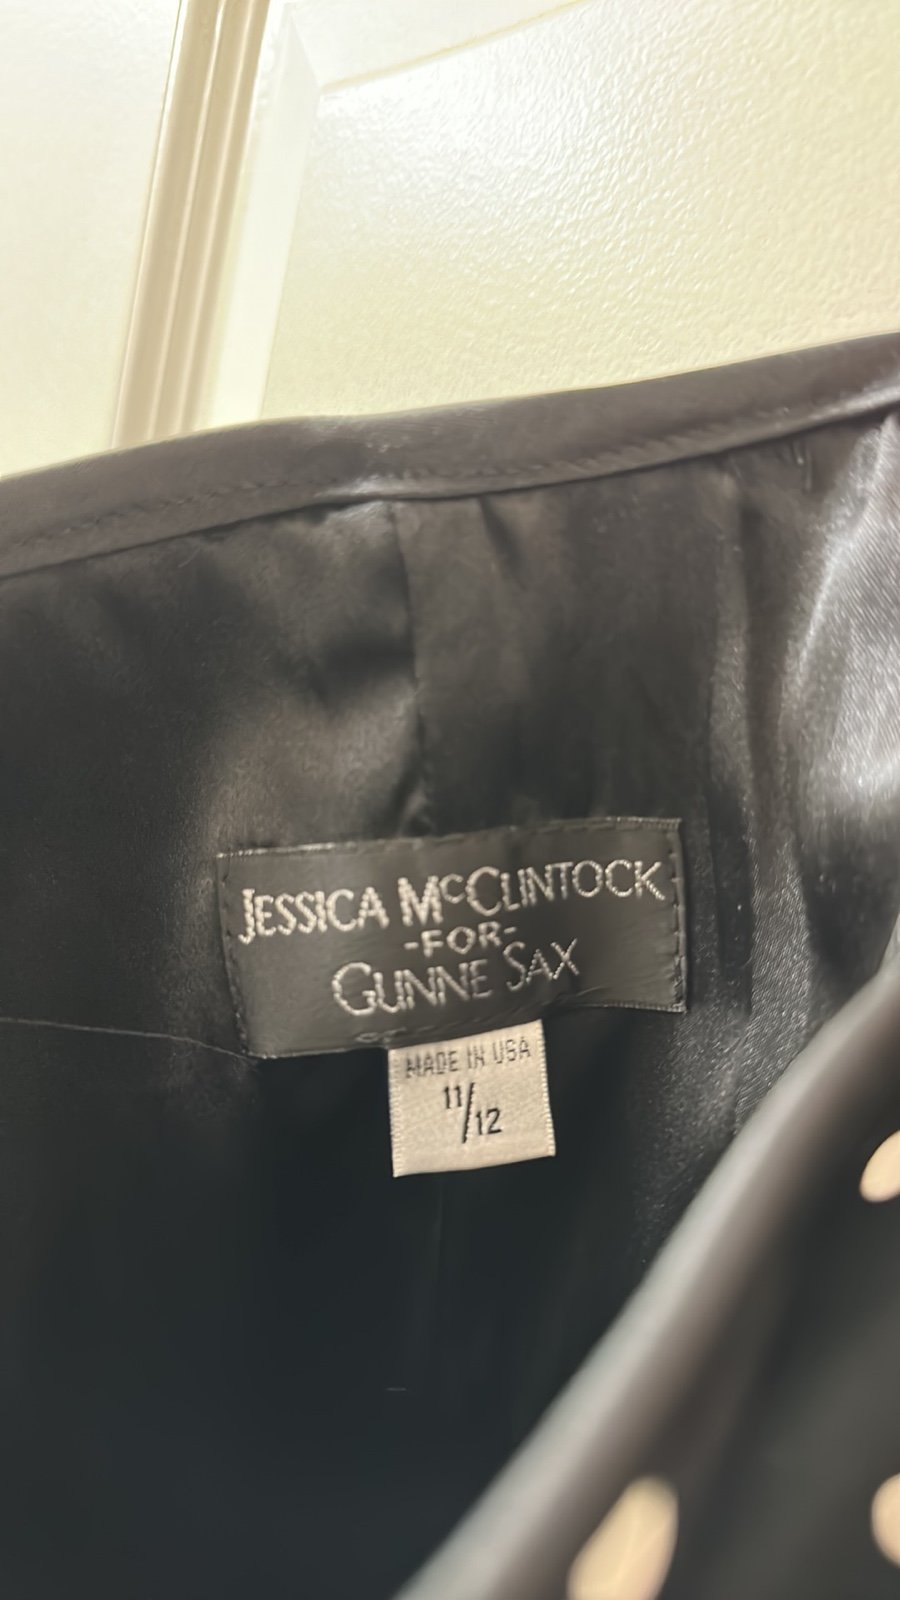 High quality Jessica McClintock Strapless Black Satin Dress 11/12 Polka Dot Retro Rockabilly m5CkitKjo Outlet Store